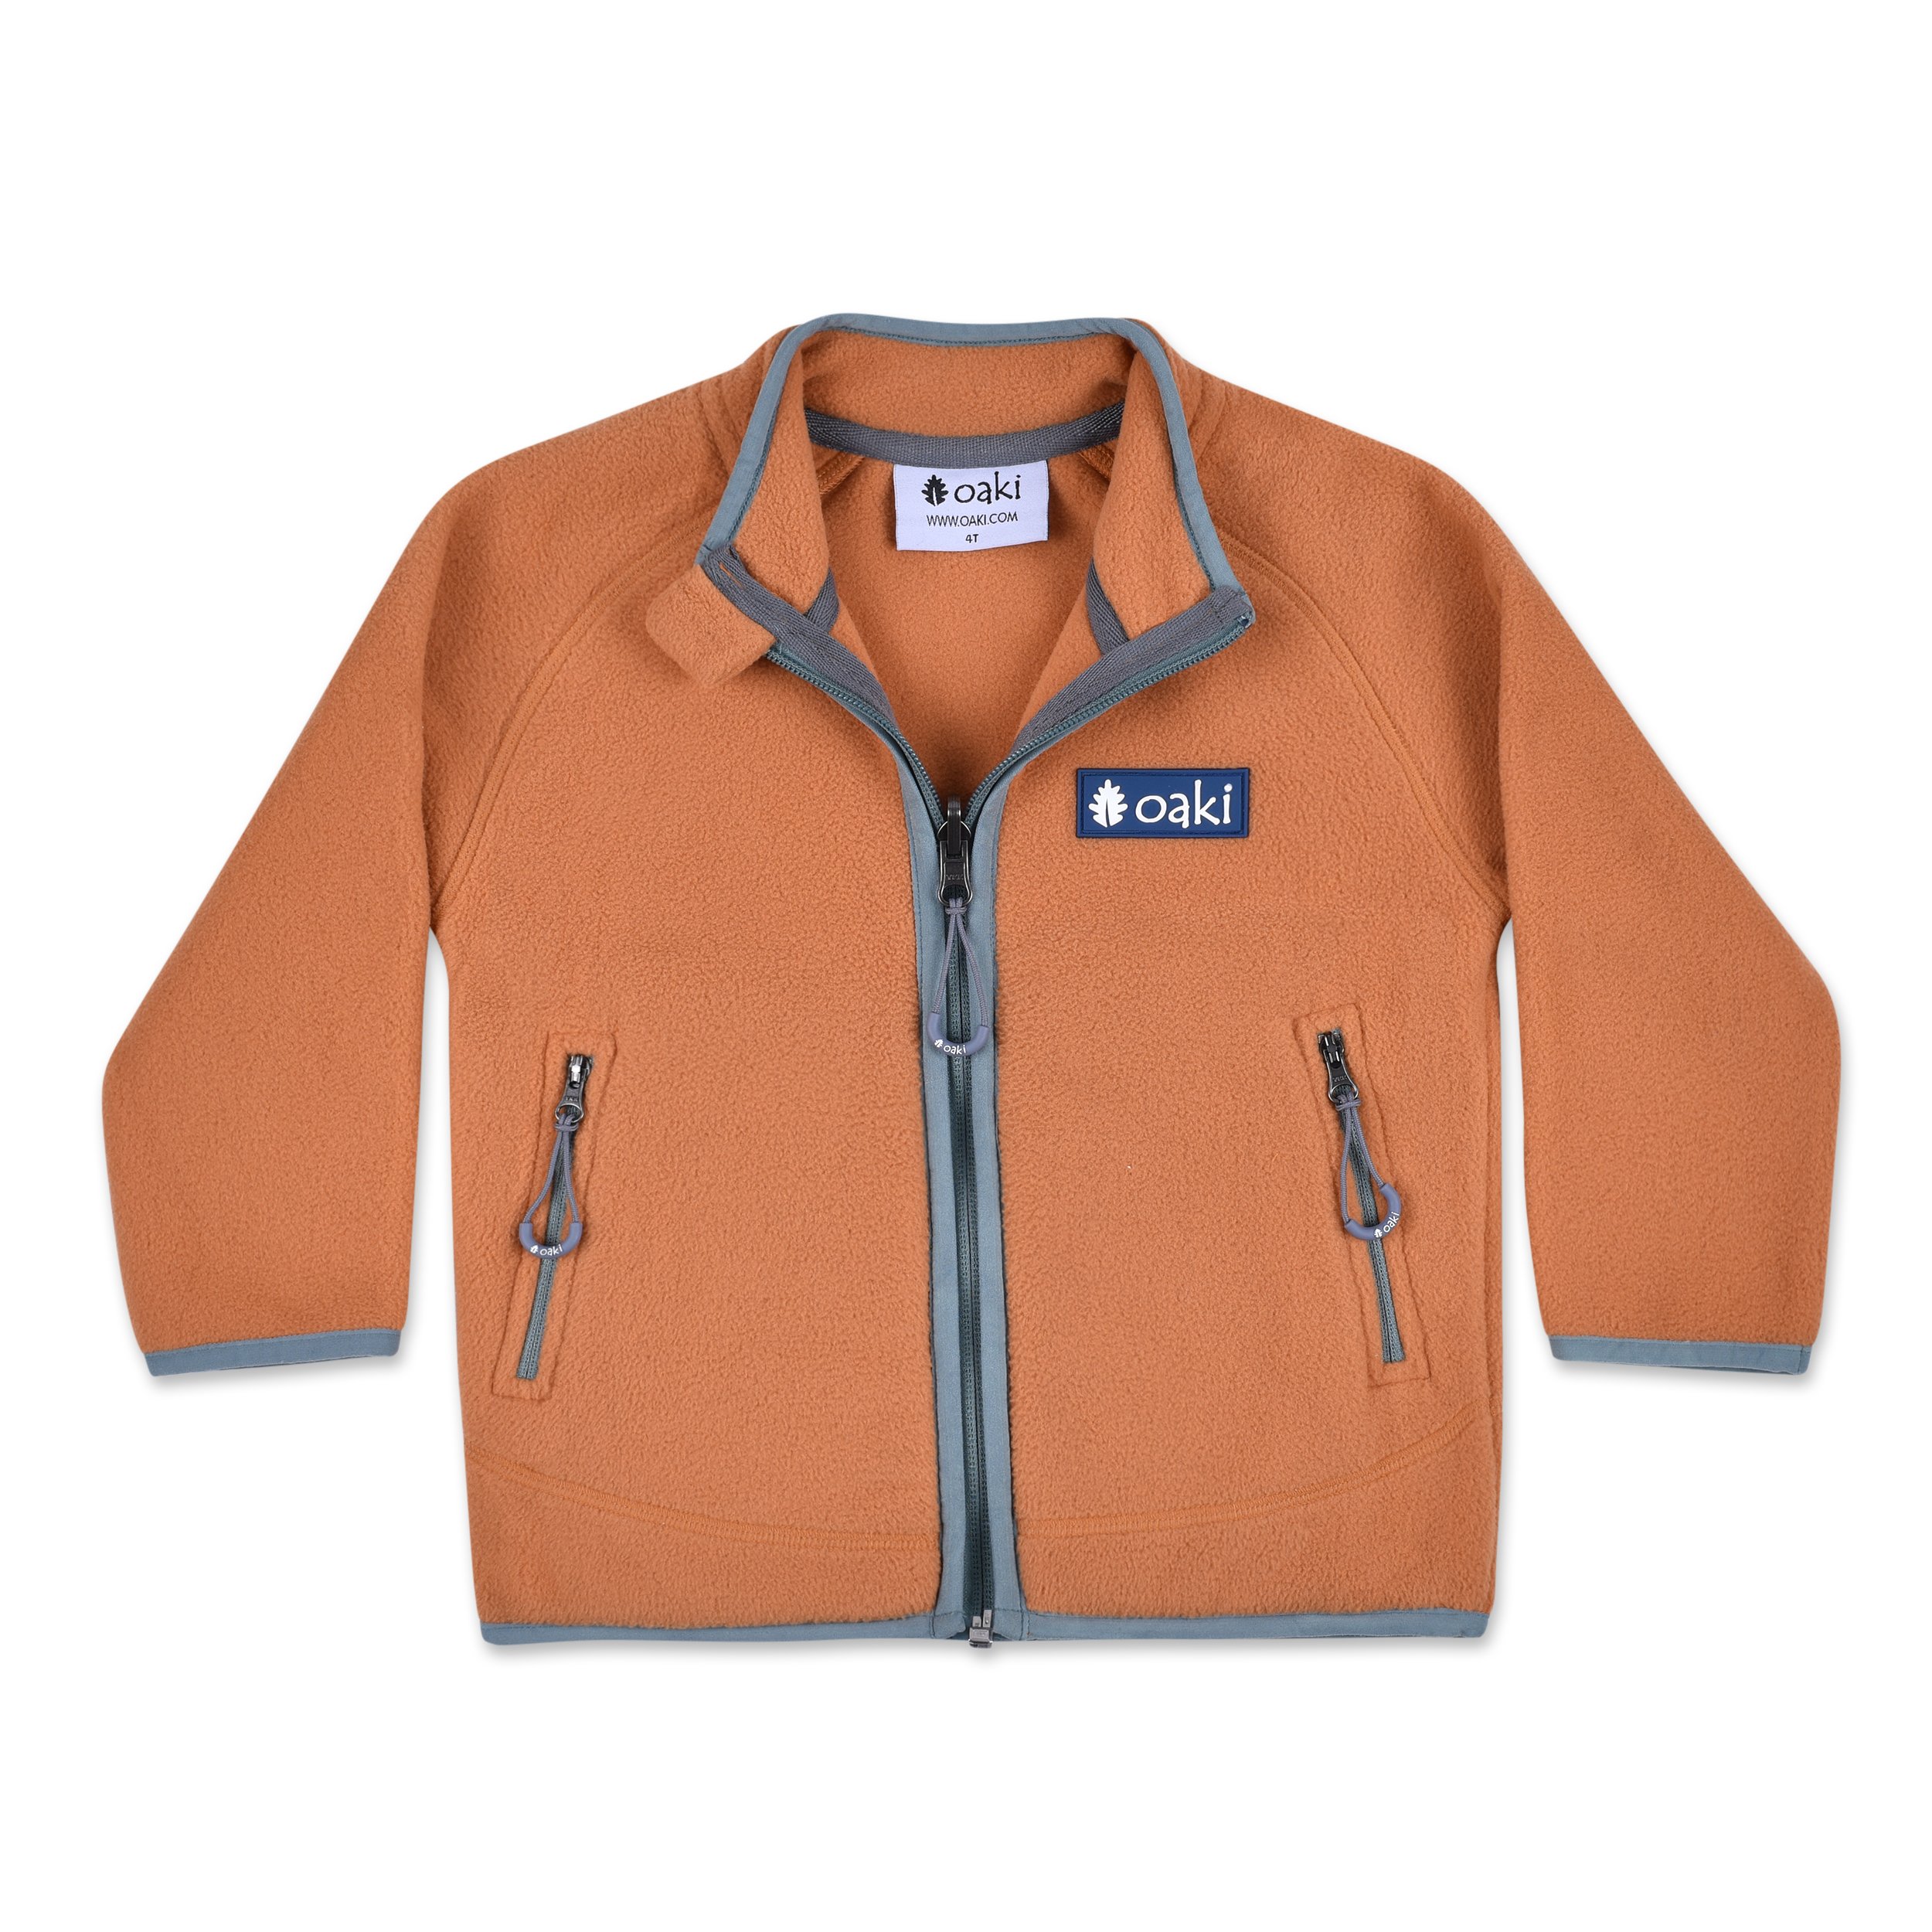 200 Series Polartec® Fleece Jacket, Burnt Orange 12-18M - image 1 of 1